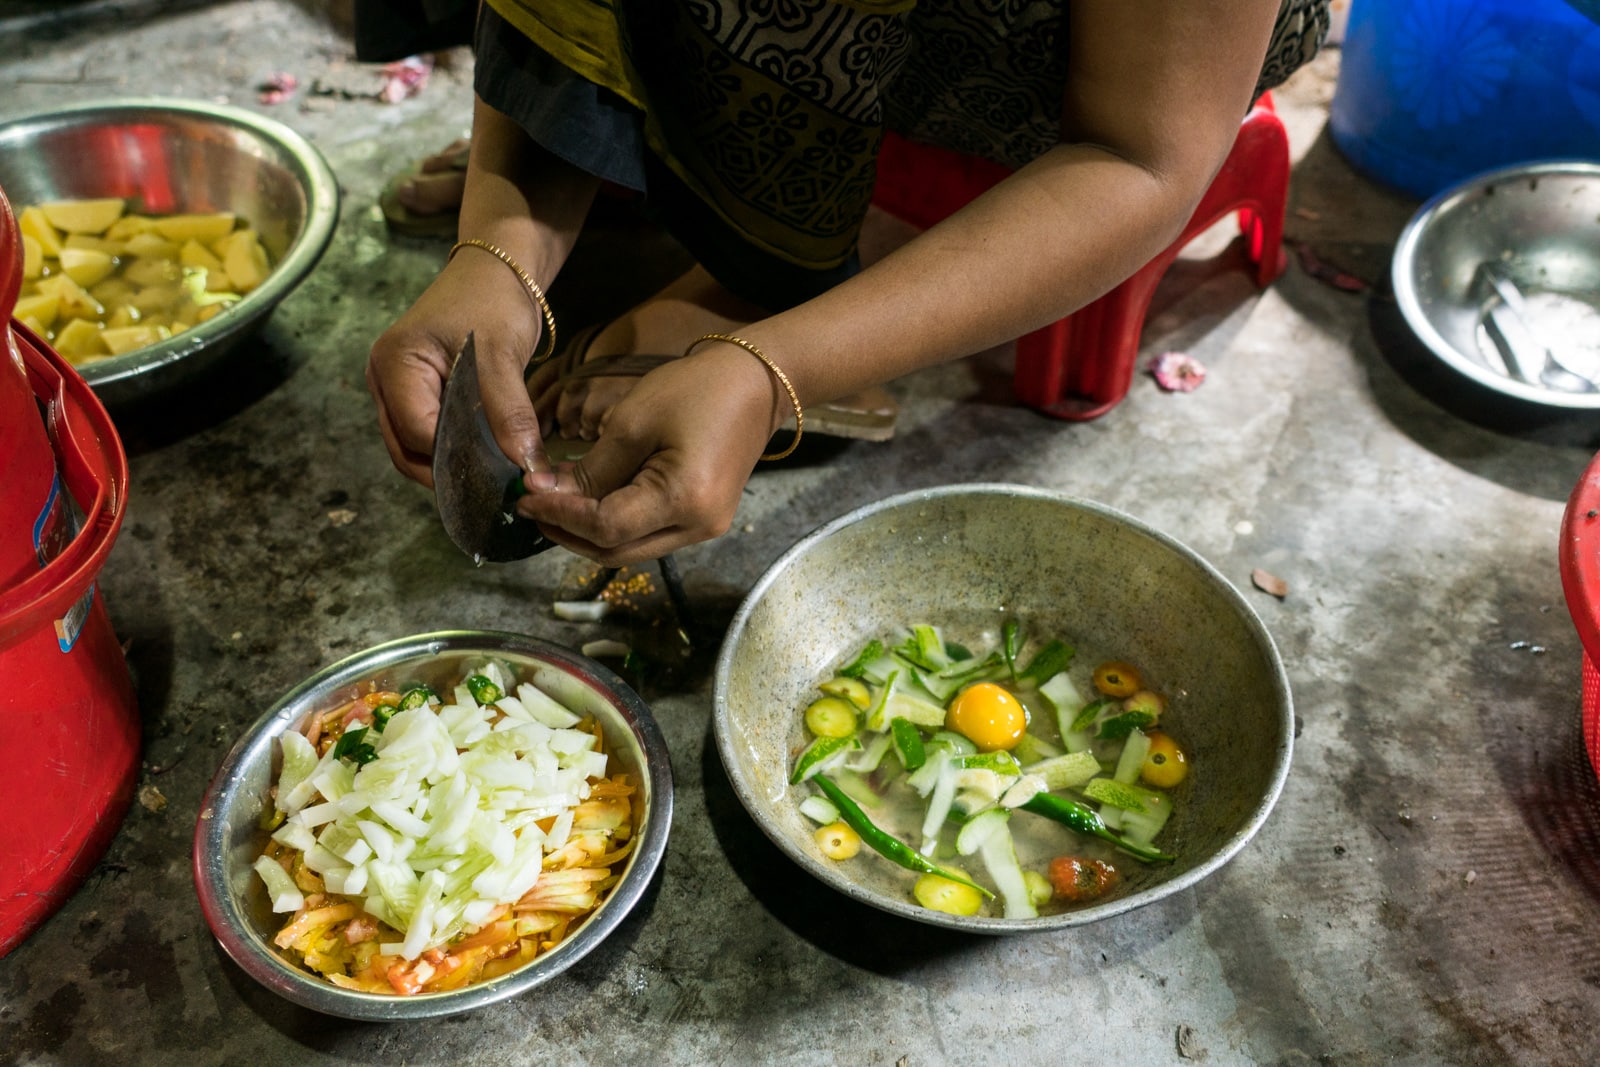 Reflections - Hands preparing lunch on Monpura island, Bangladesh - Lost With Purpose travel blog